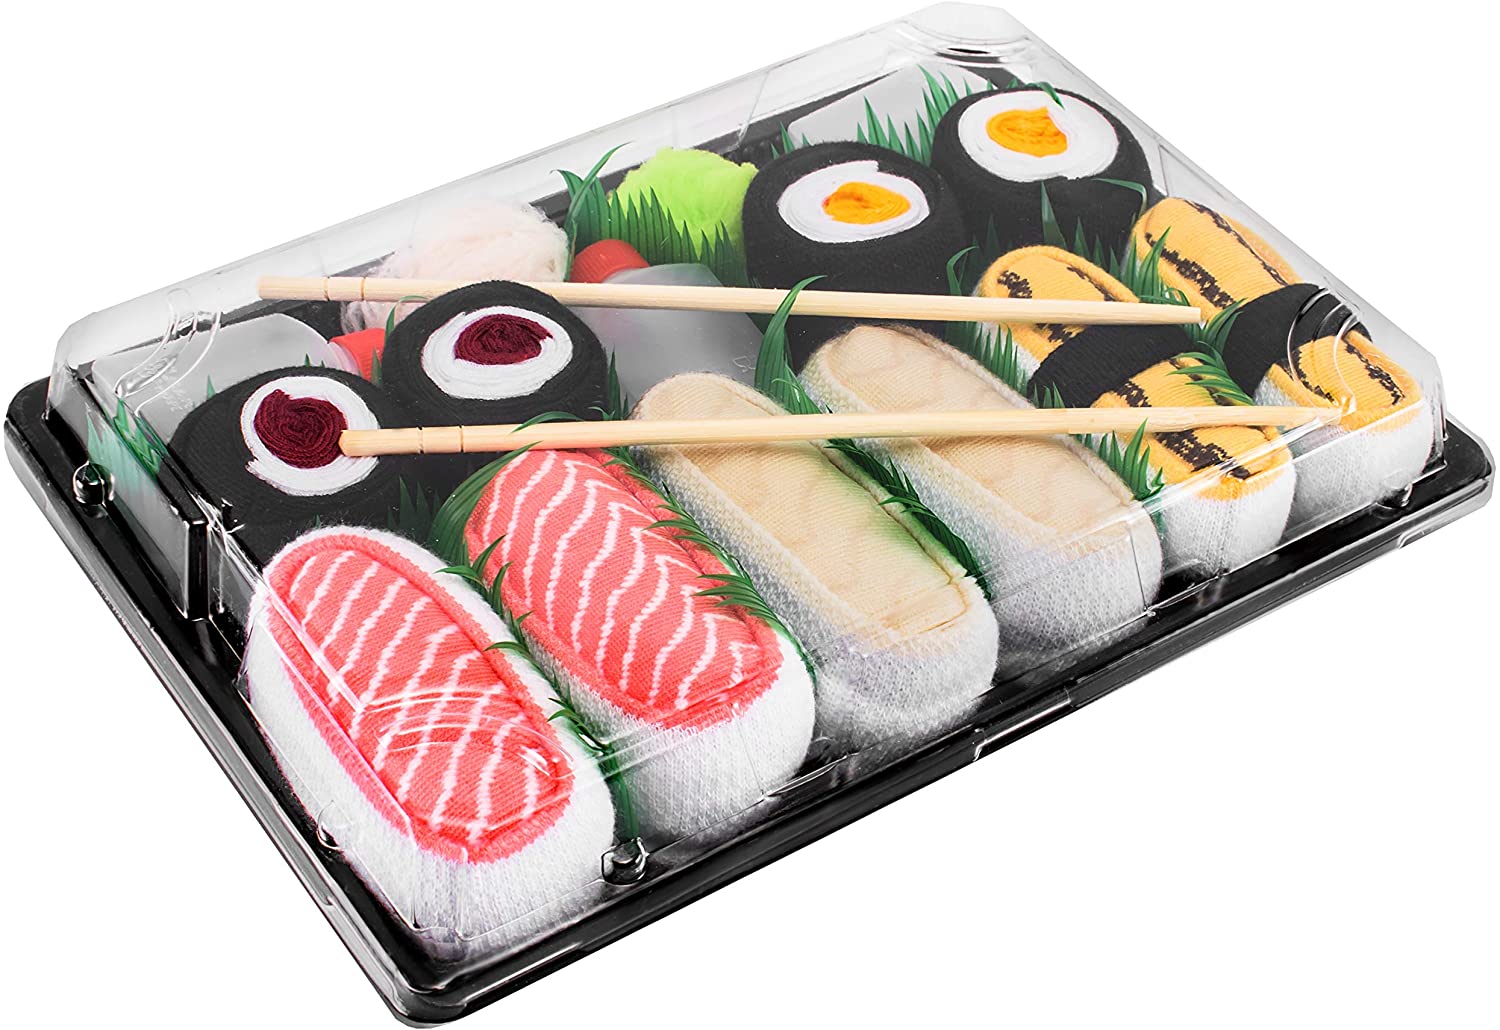 Rainbow Socks - Damen Herren - Sushi Socken Tamago Lasch Butterfisch 2x Maki 5 Paar